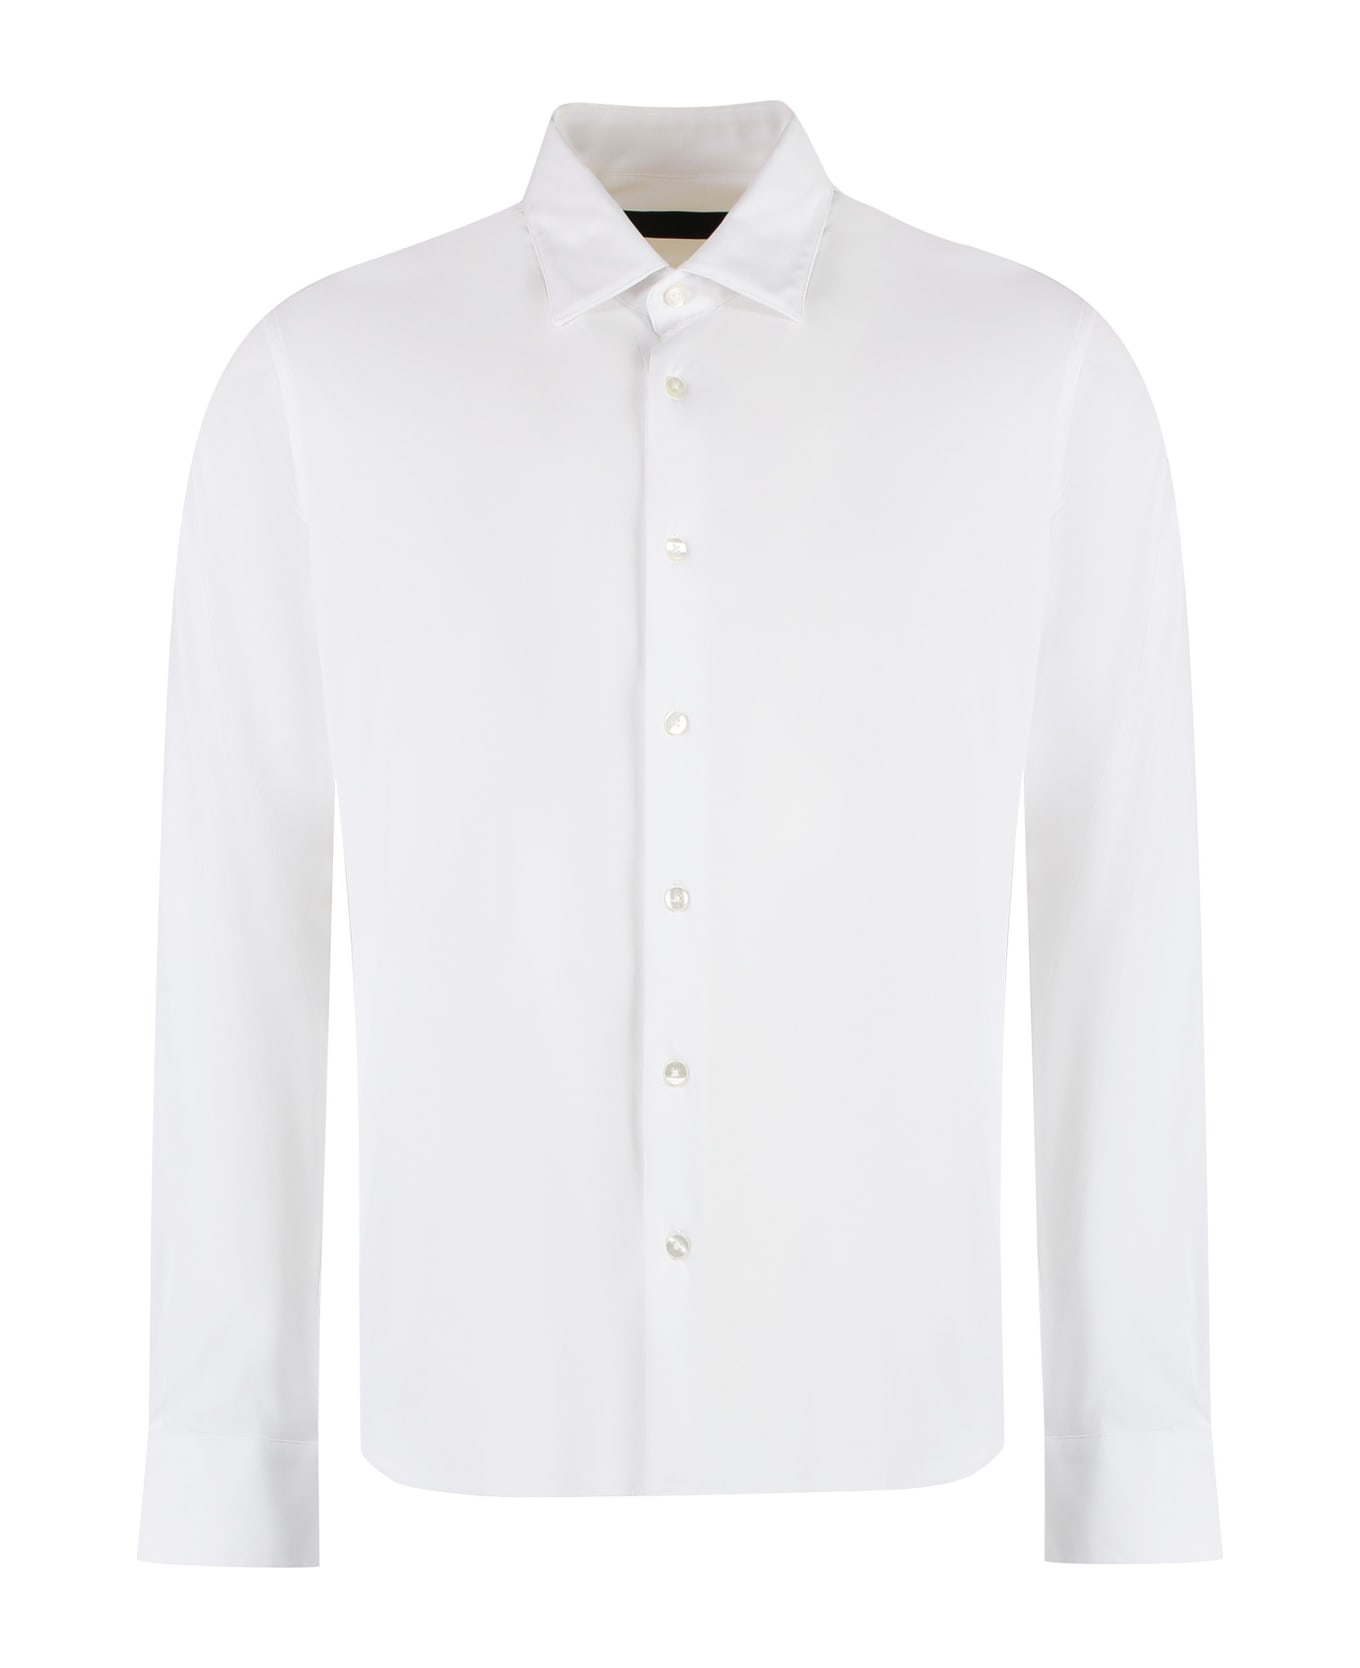 RRD - Roberto Ricci Design Technical Fabric Shirt - Bianco